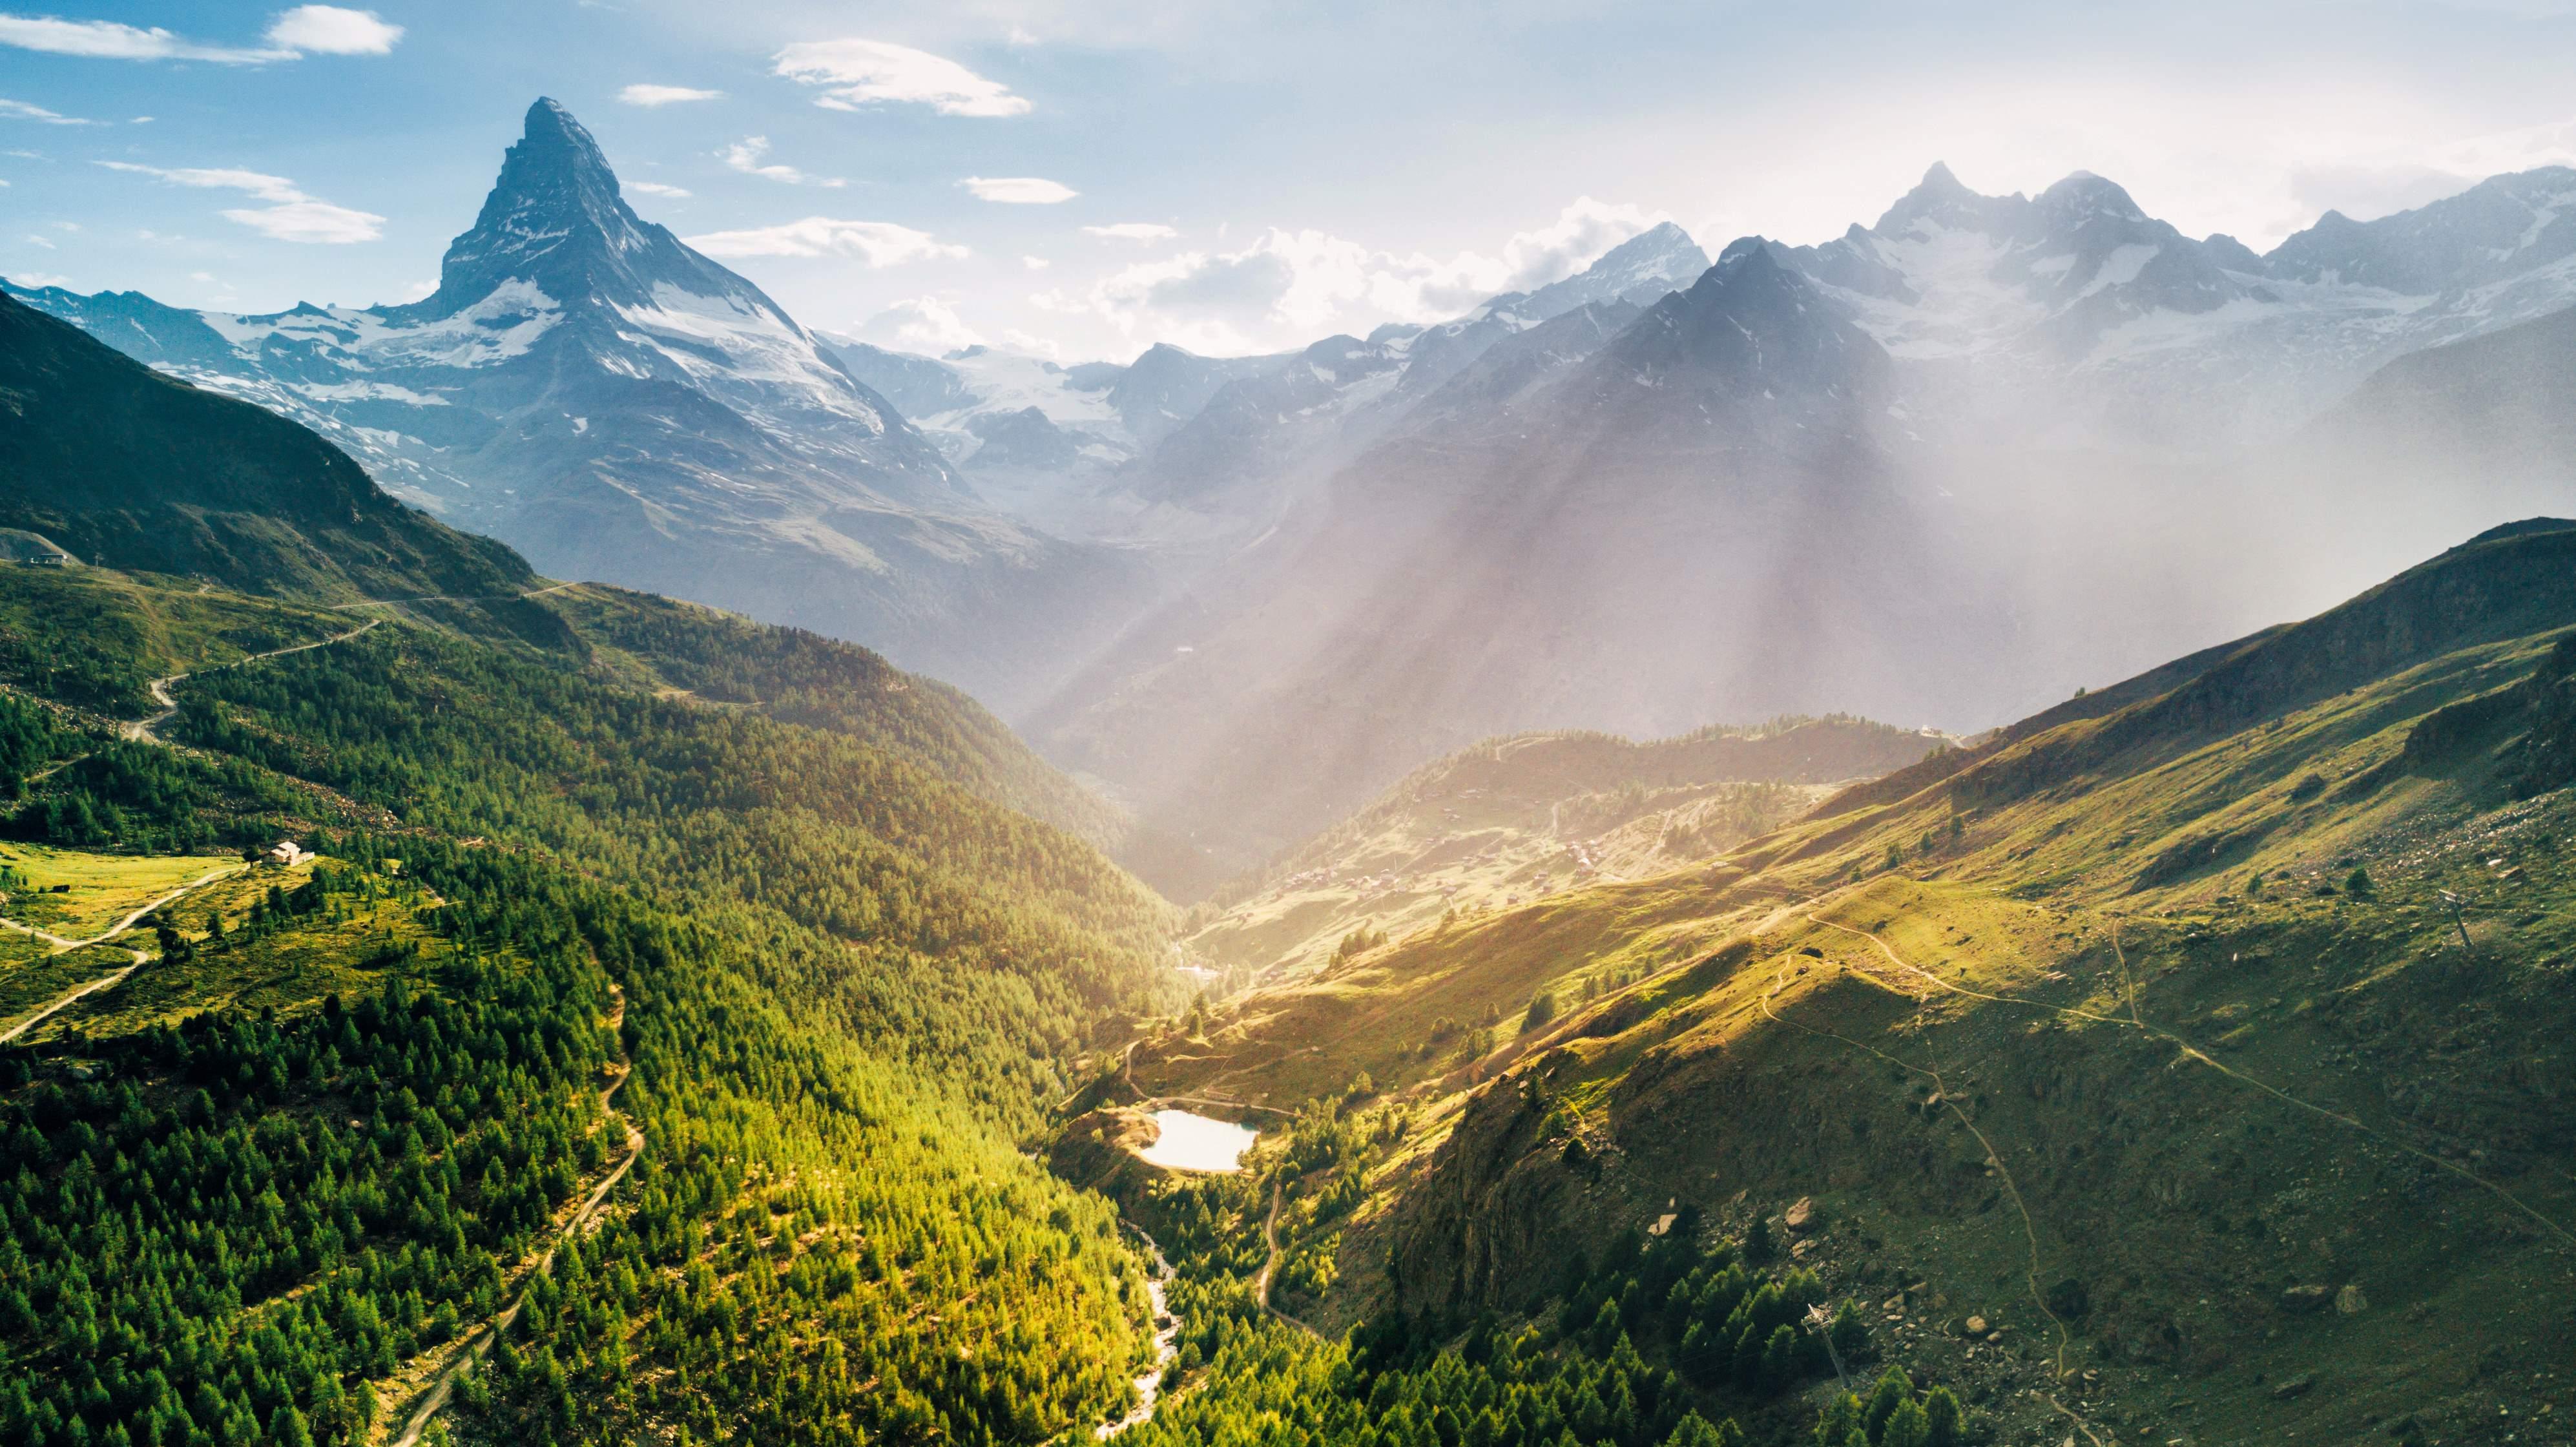 Swiss mountainous landscape